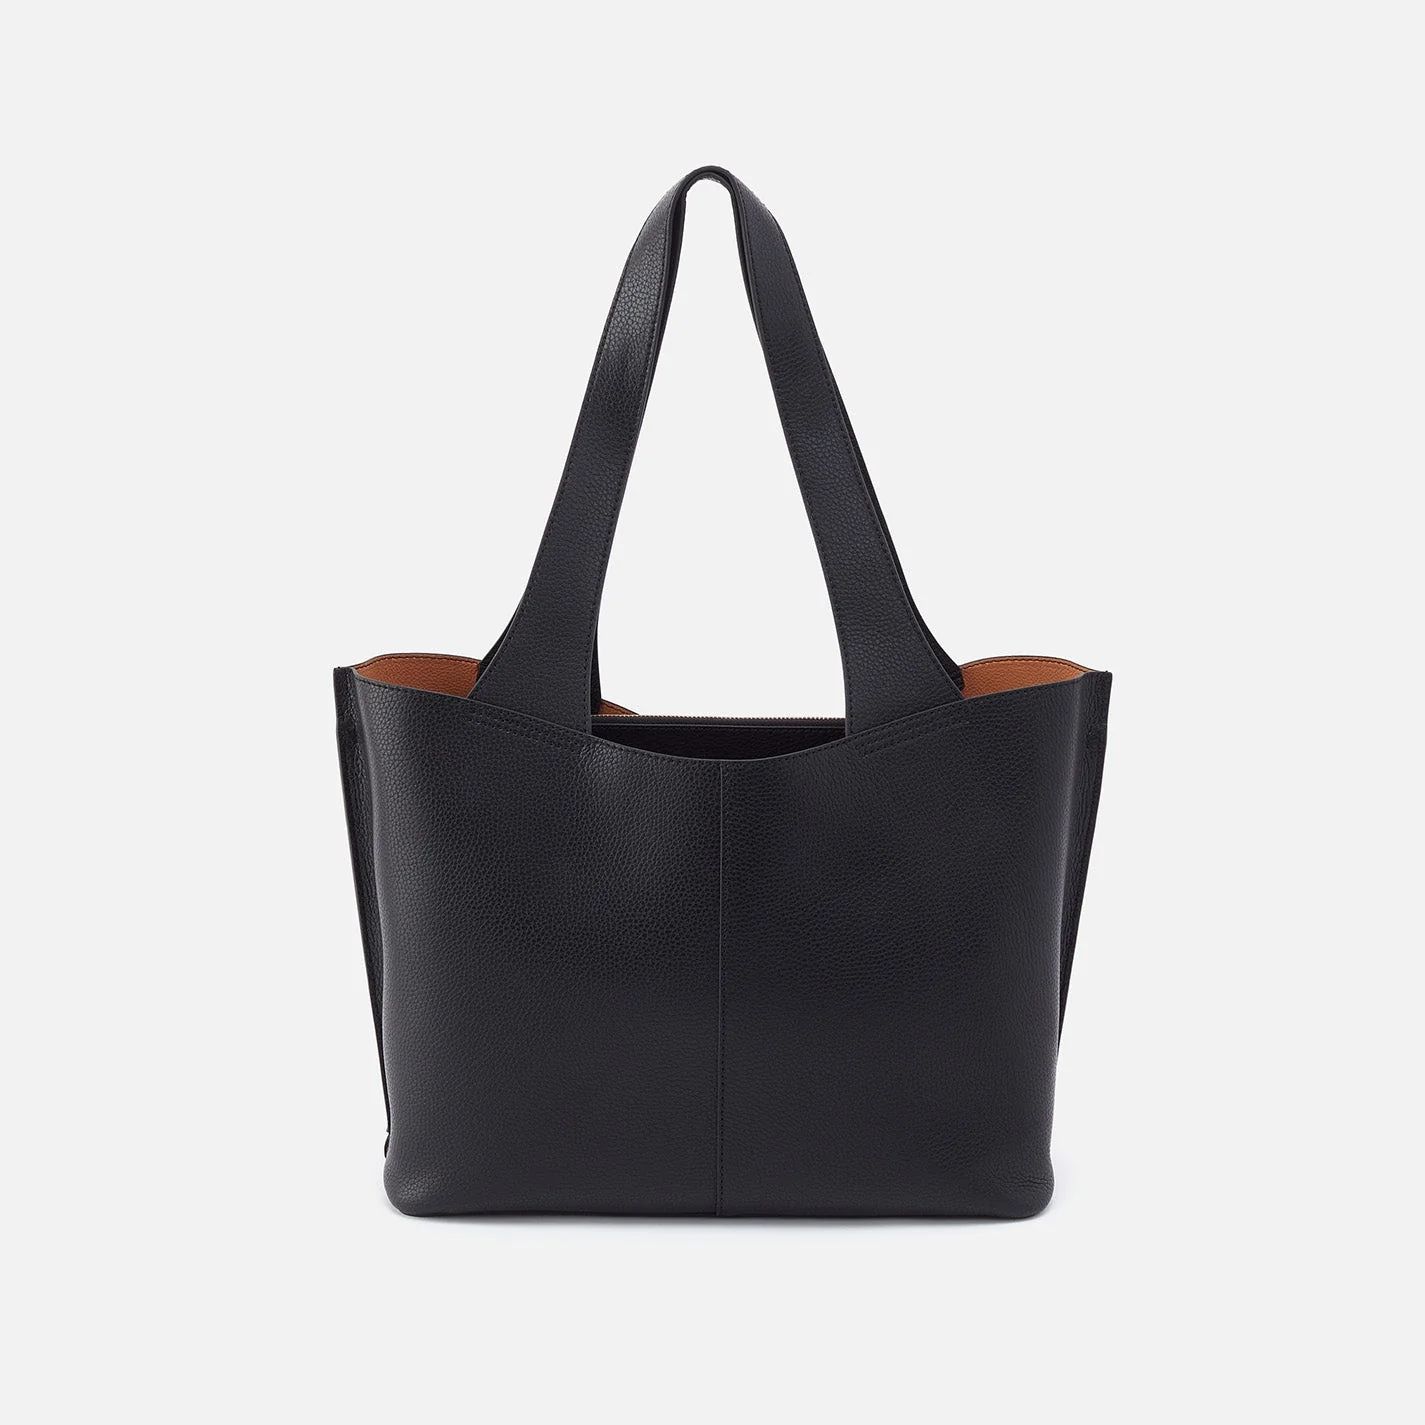 Vida Tote in Micro Pebbled Leather - Black | HOBO Bags